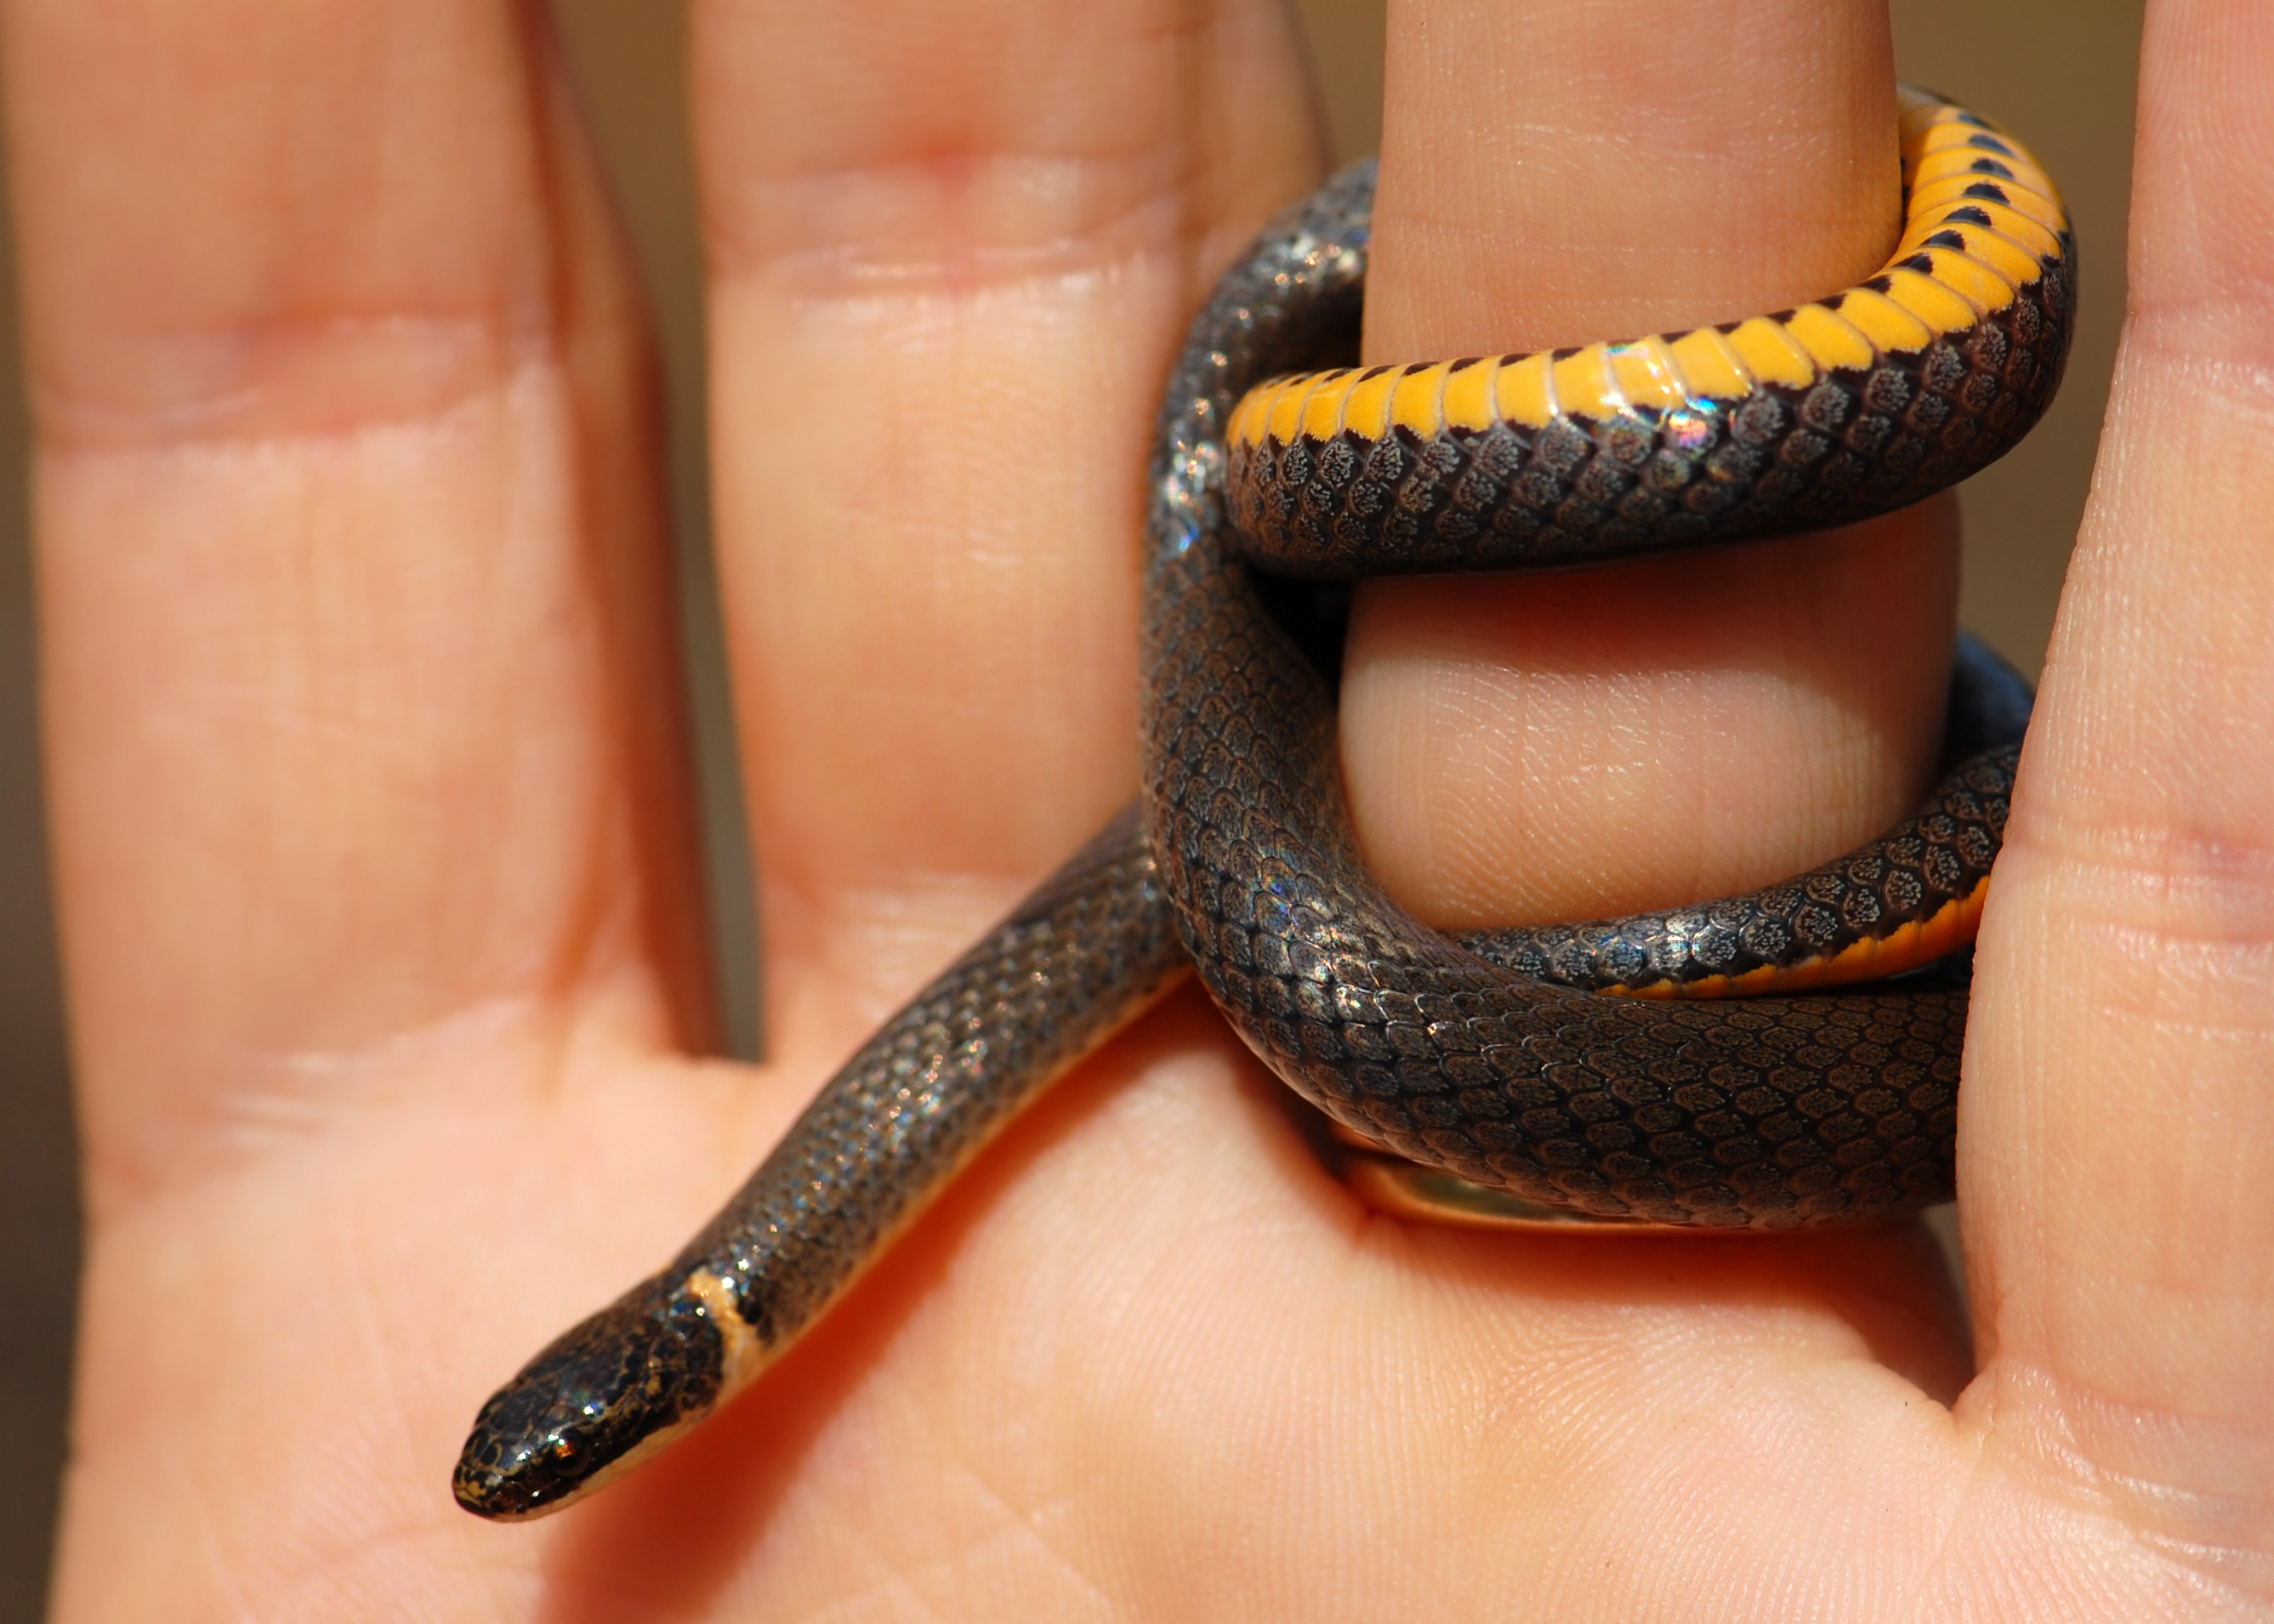 Ring-necked snake - Wikipedia